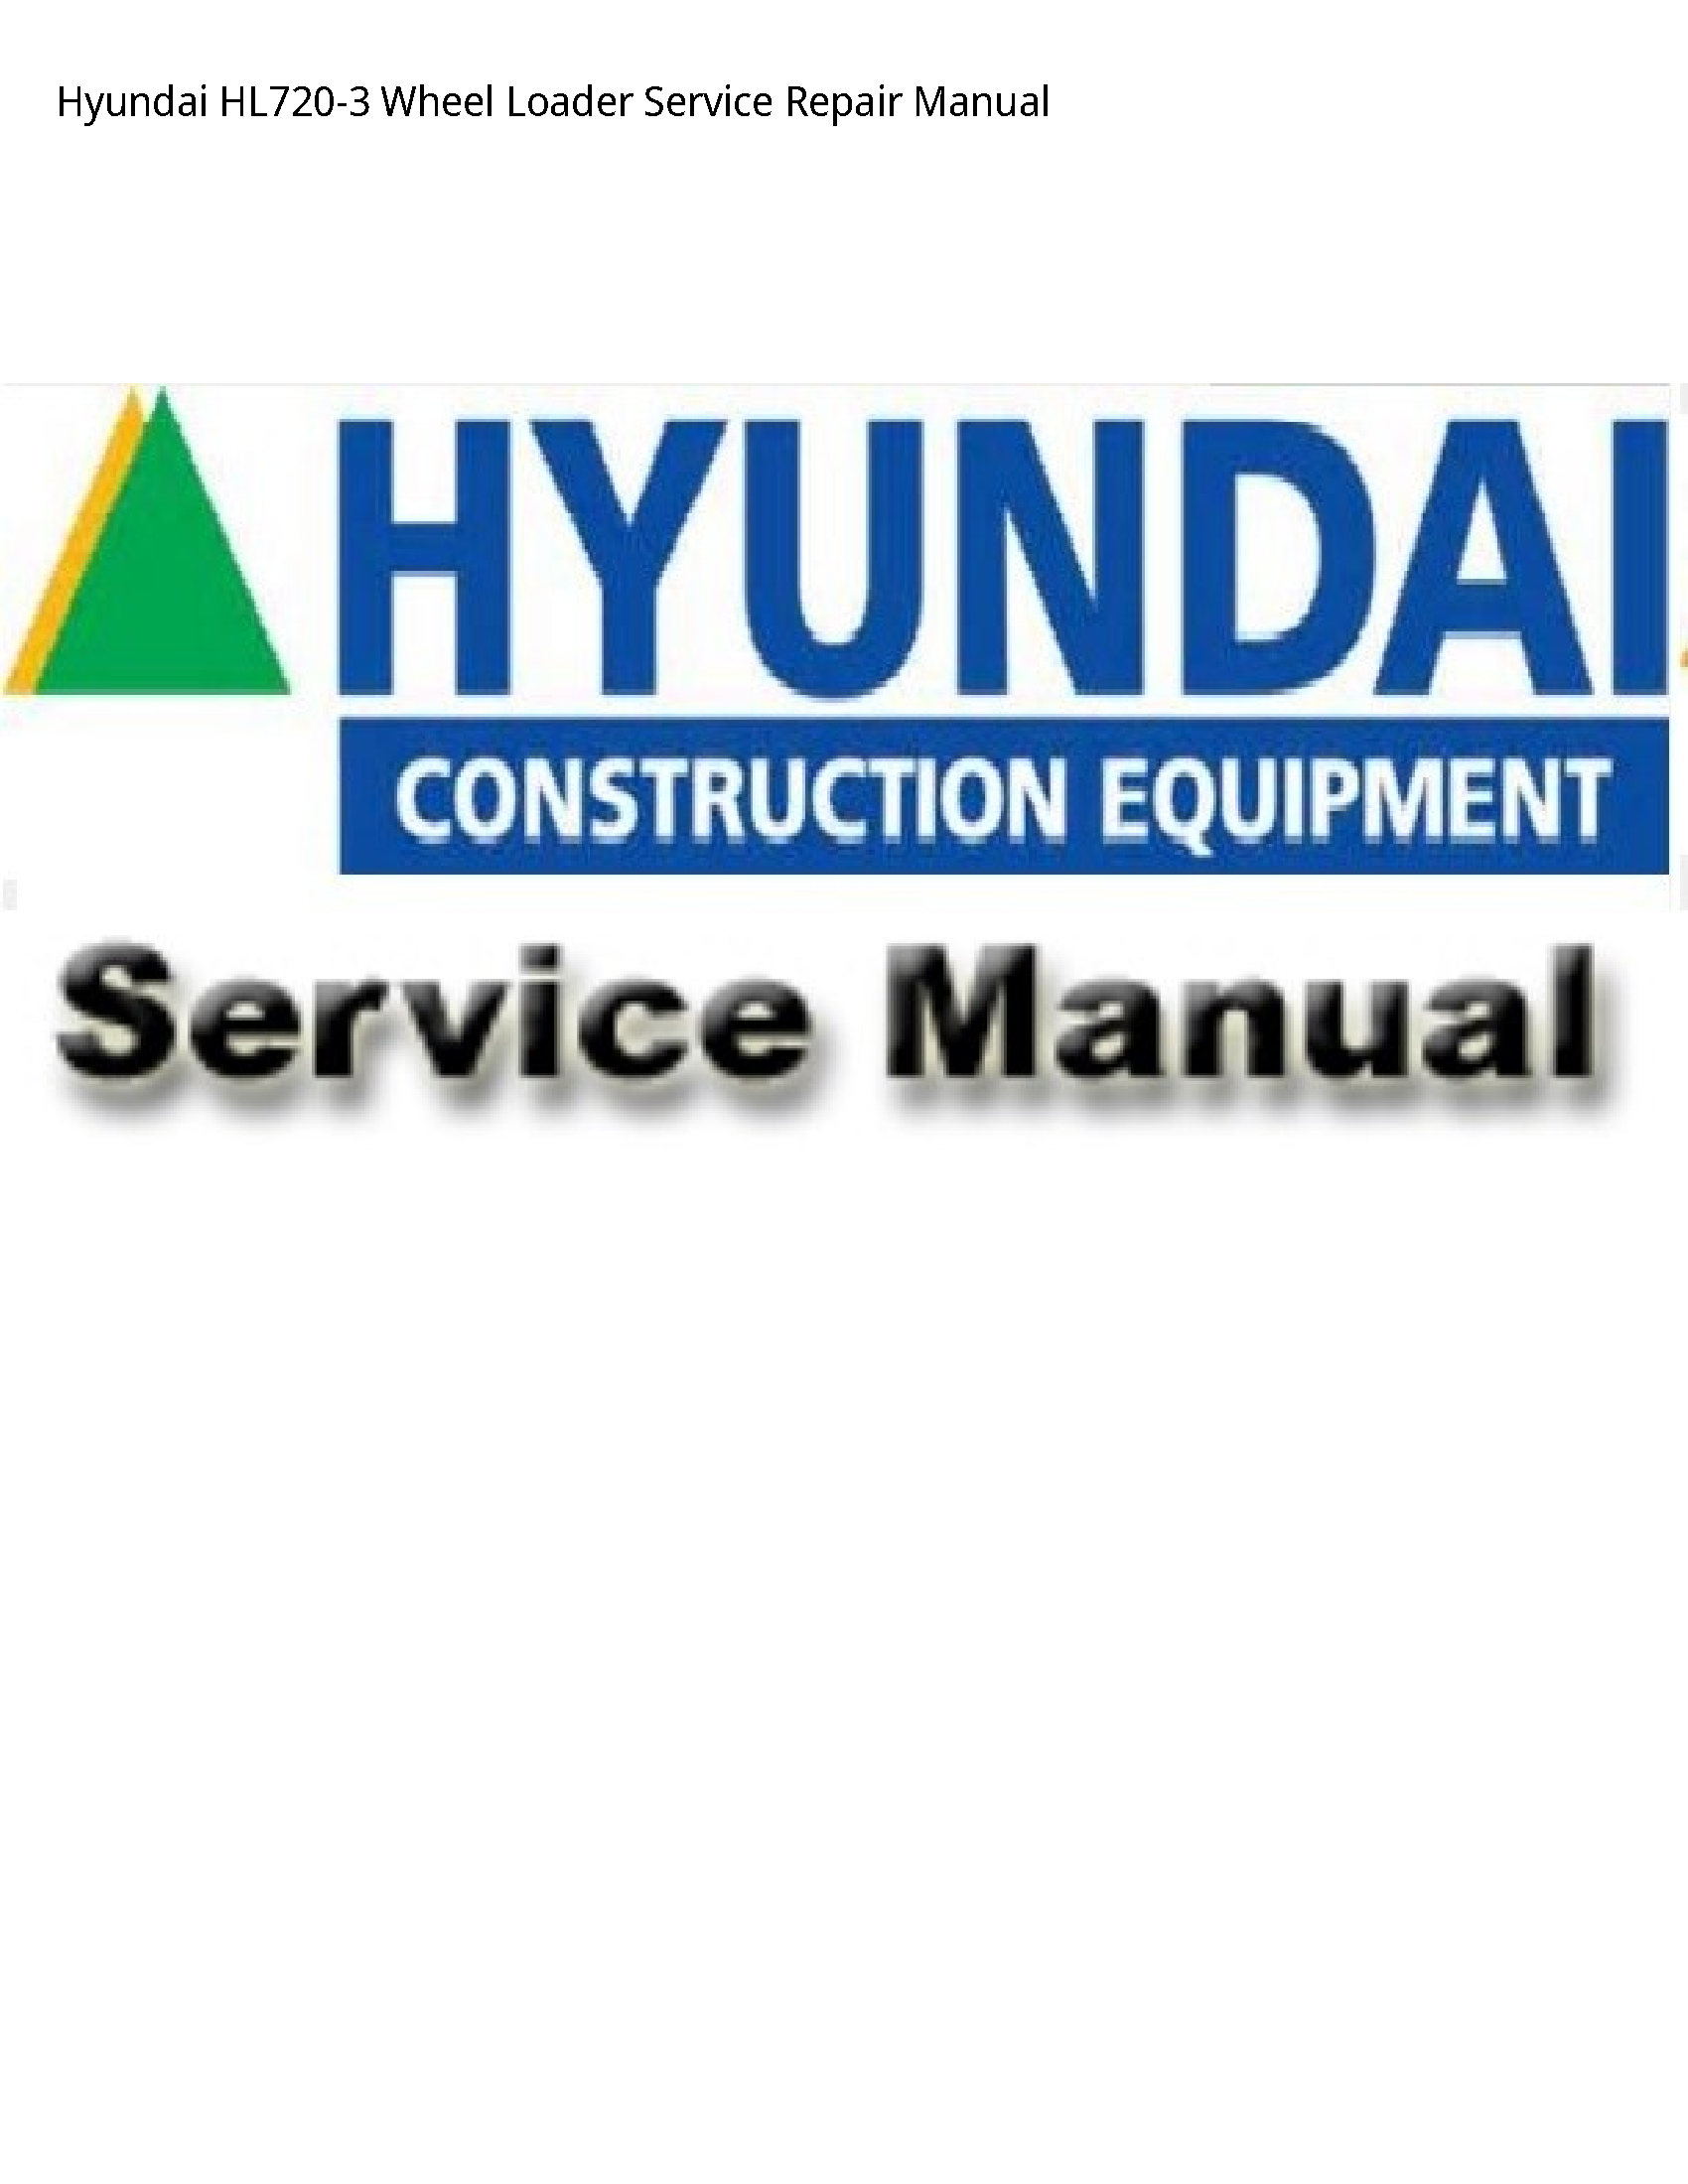 Hyundai HL720-3 Wheel Loader manual